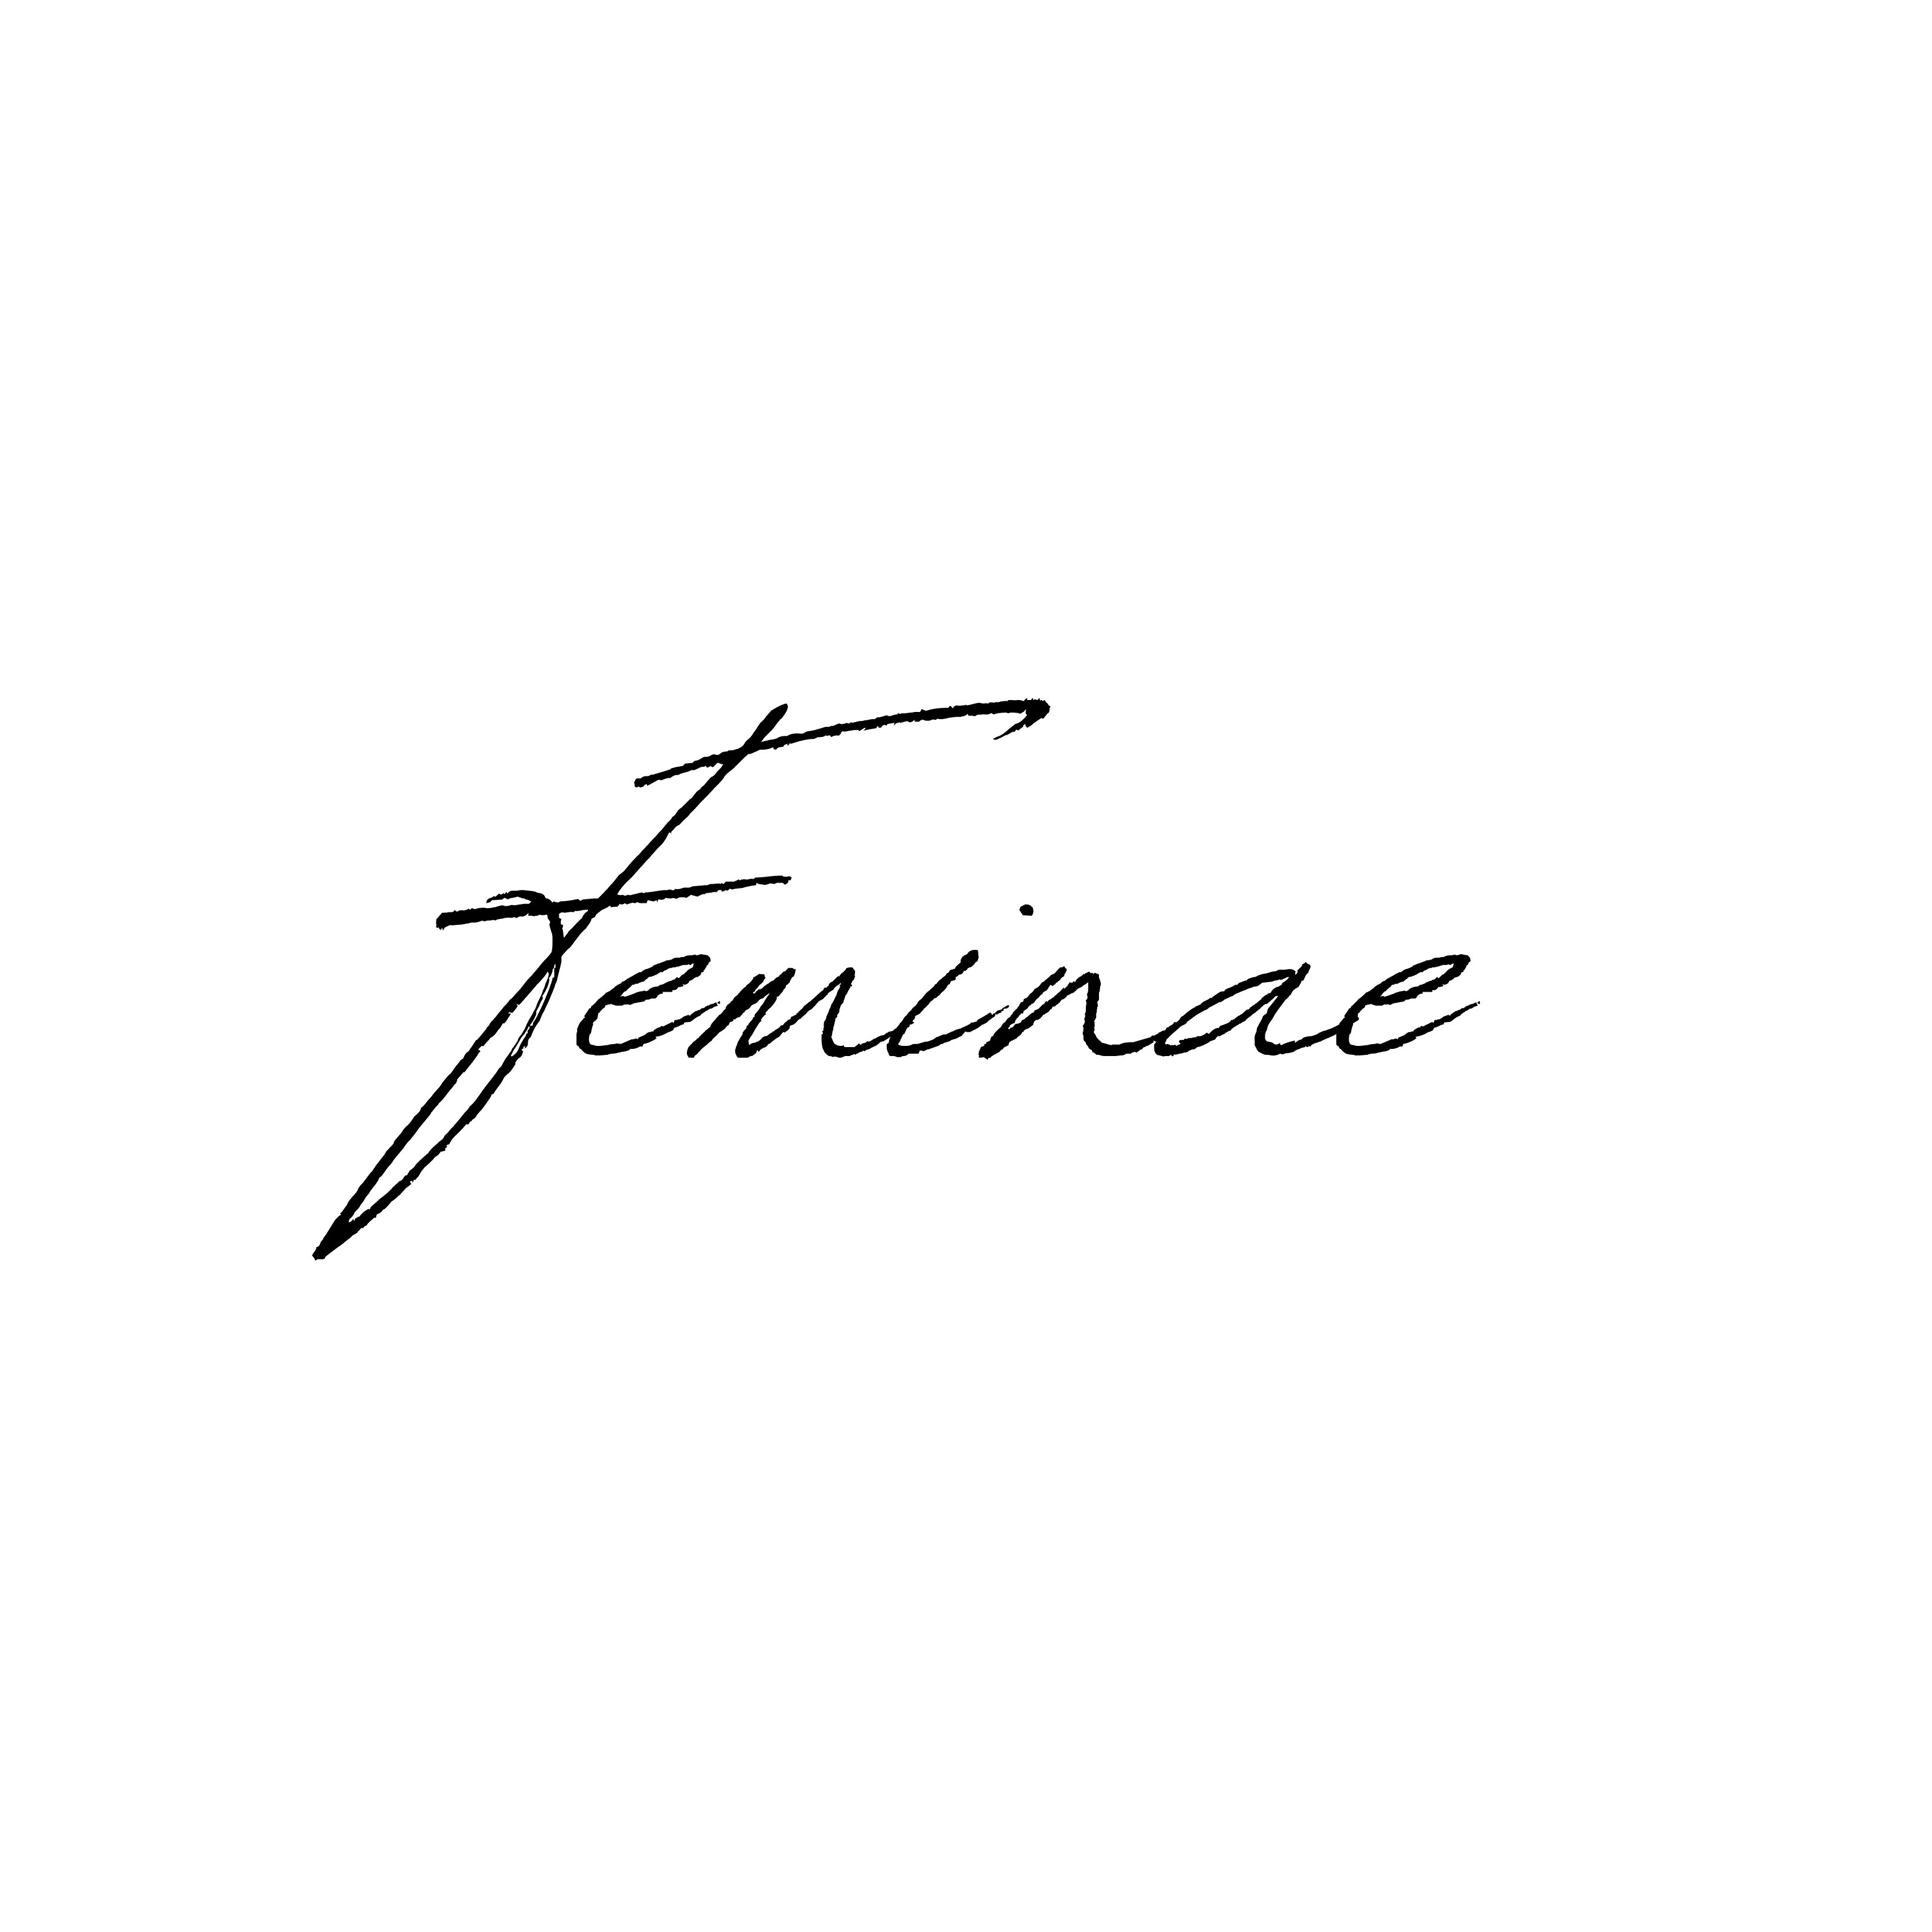 The Feminae Collective